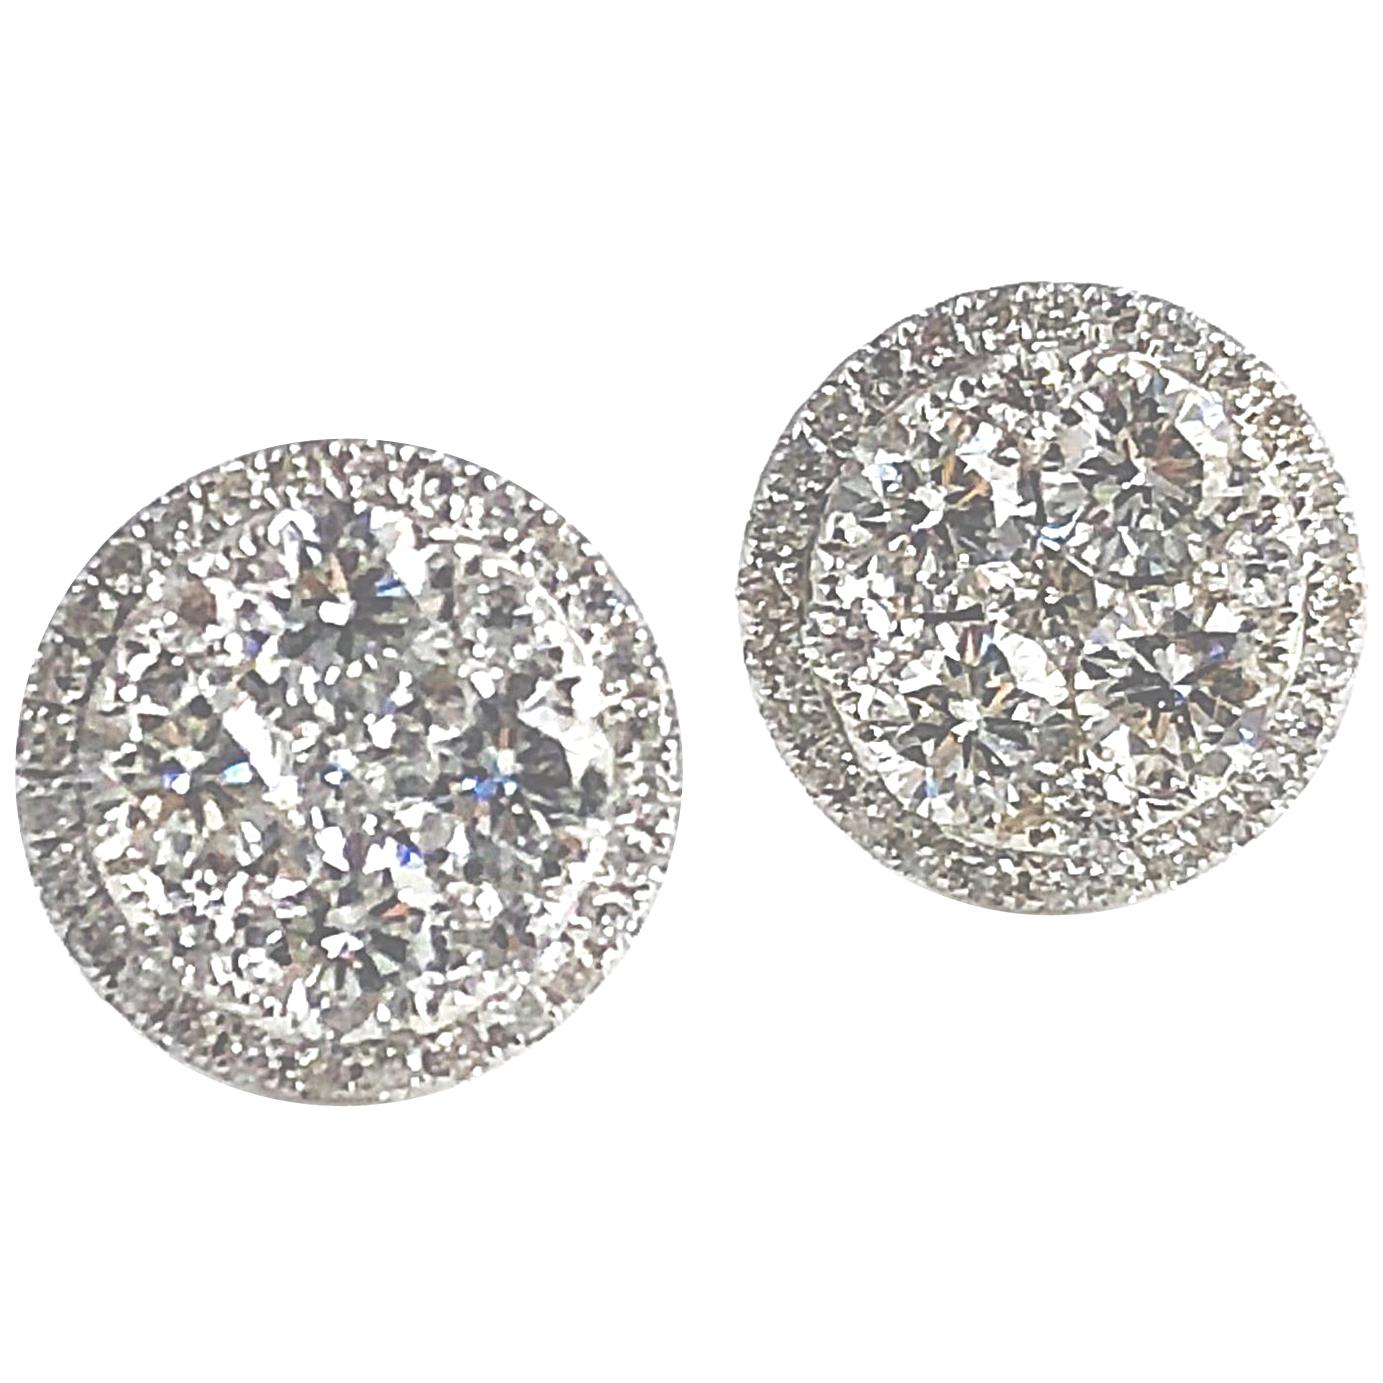 DiamondTown 1.59 Carat Diamond Cluster Bezel Stud Earrings in 18 Karat Gold